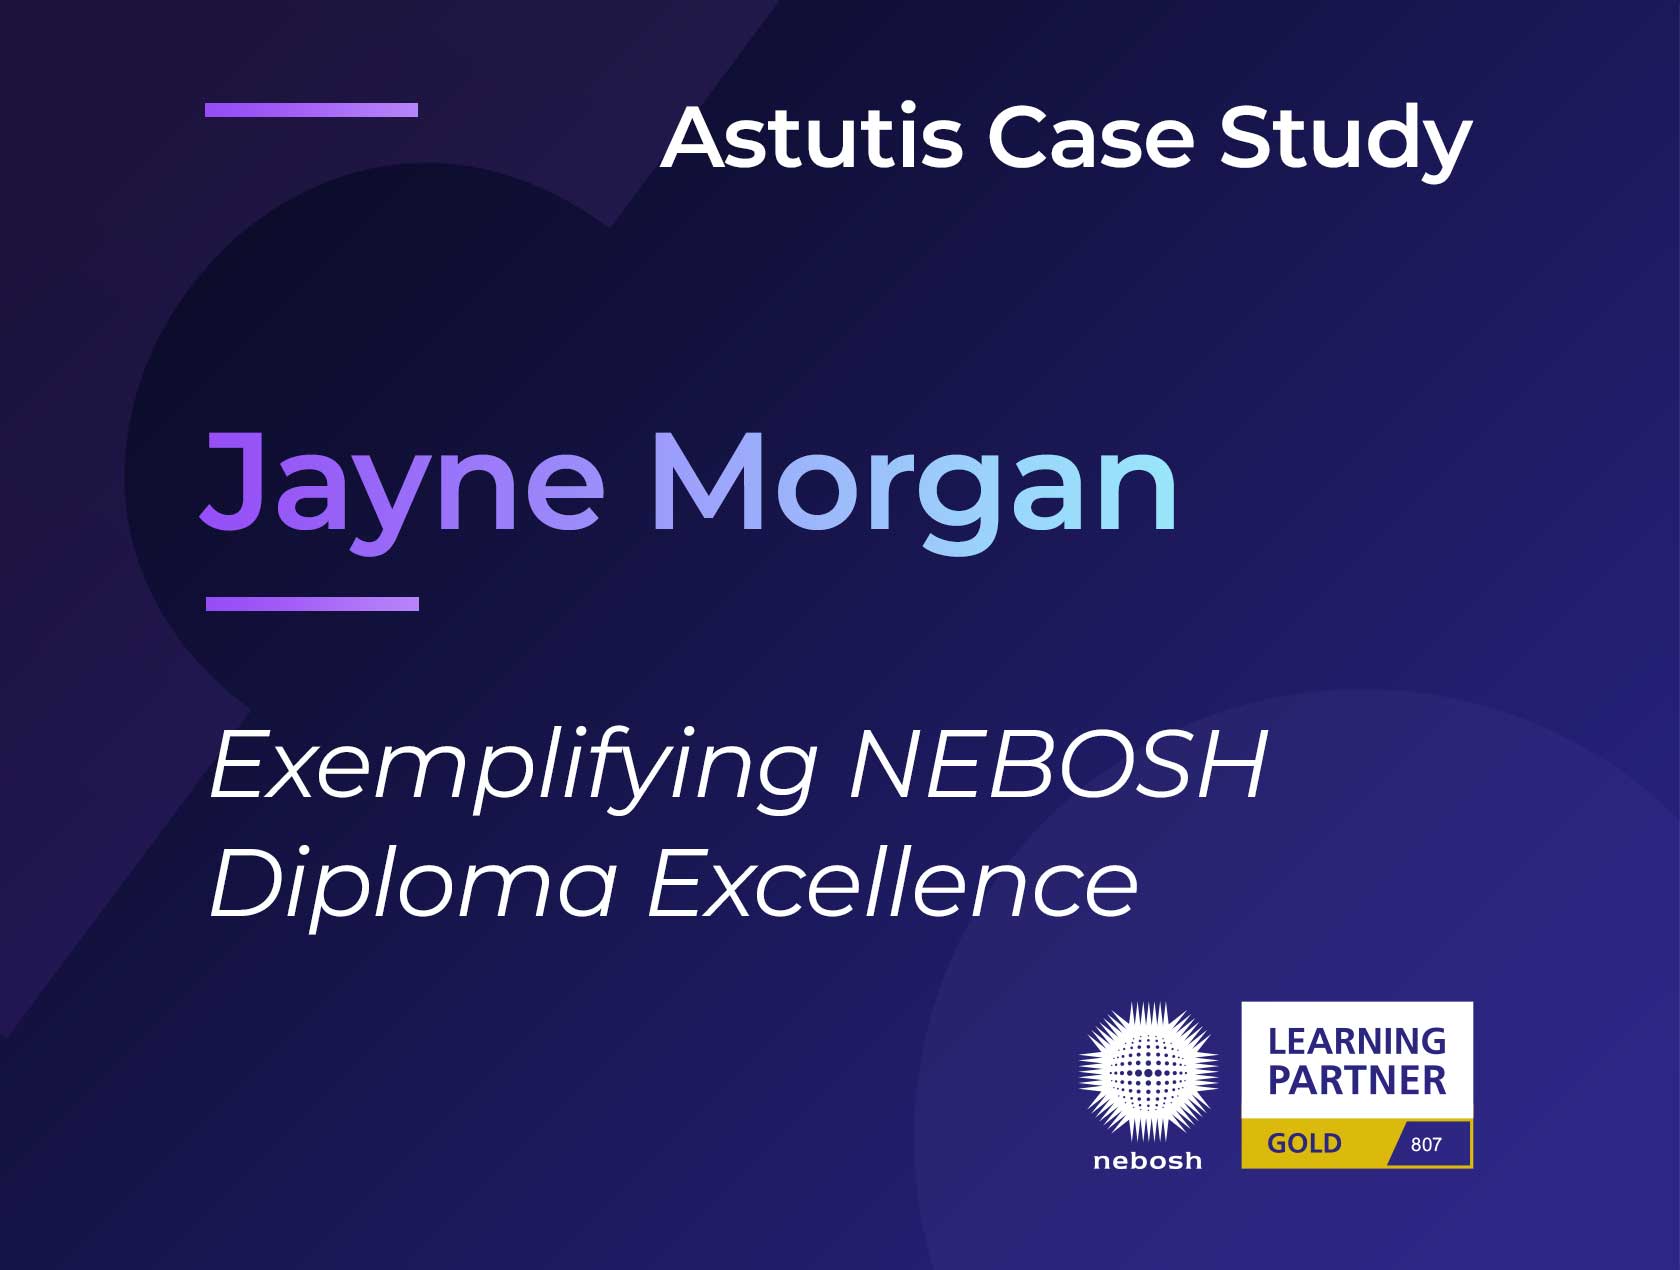 Jayne Morgan: Exemplifying NEBOSH Diploma Excellence